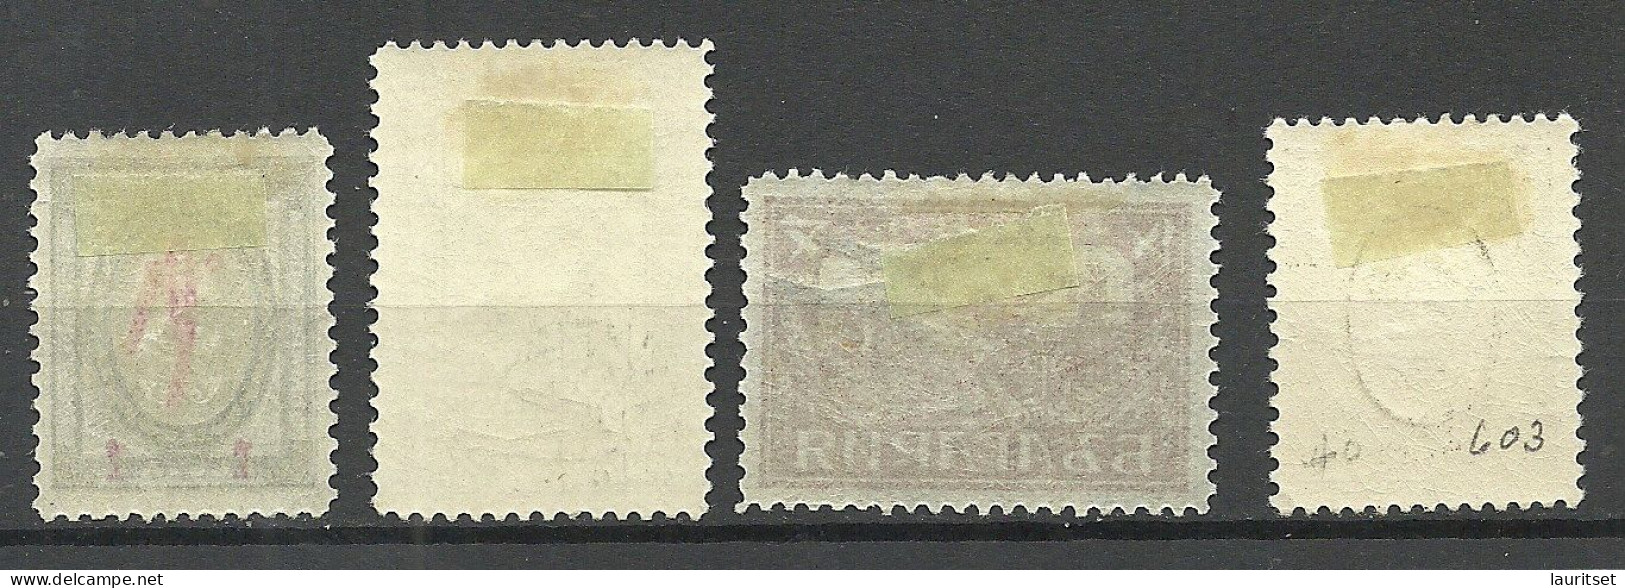 BULGARIA Bulgarien 1927/28 Michel 206 - 206 * - Airmail